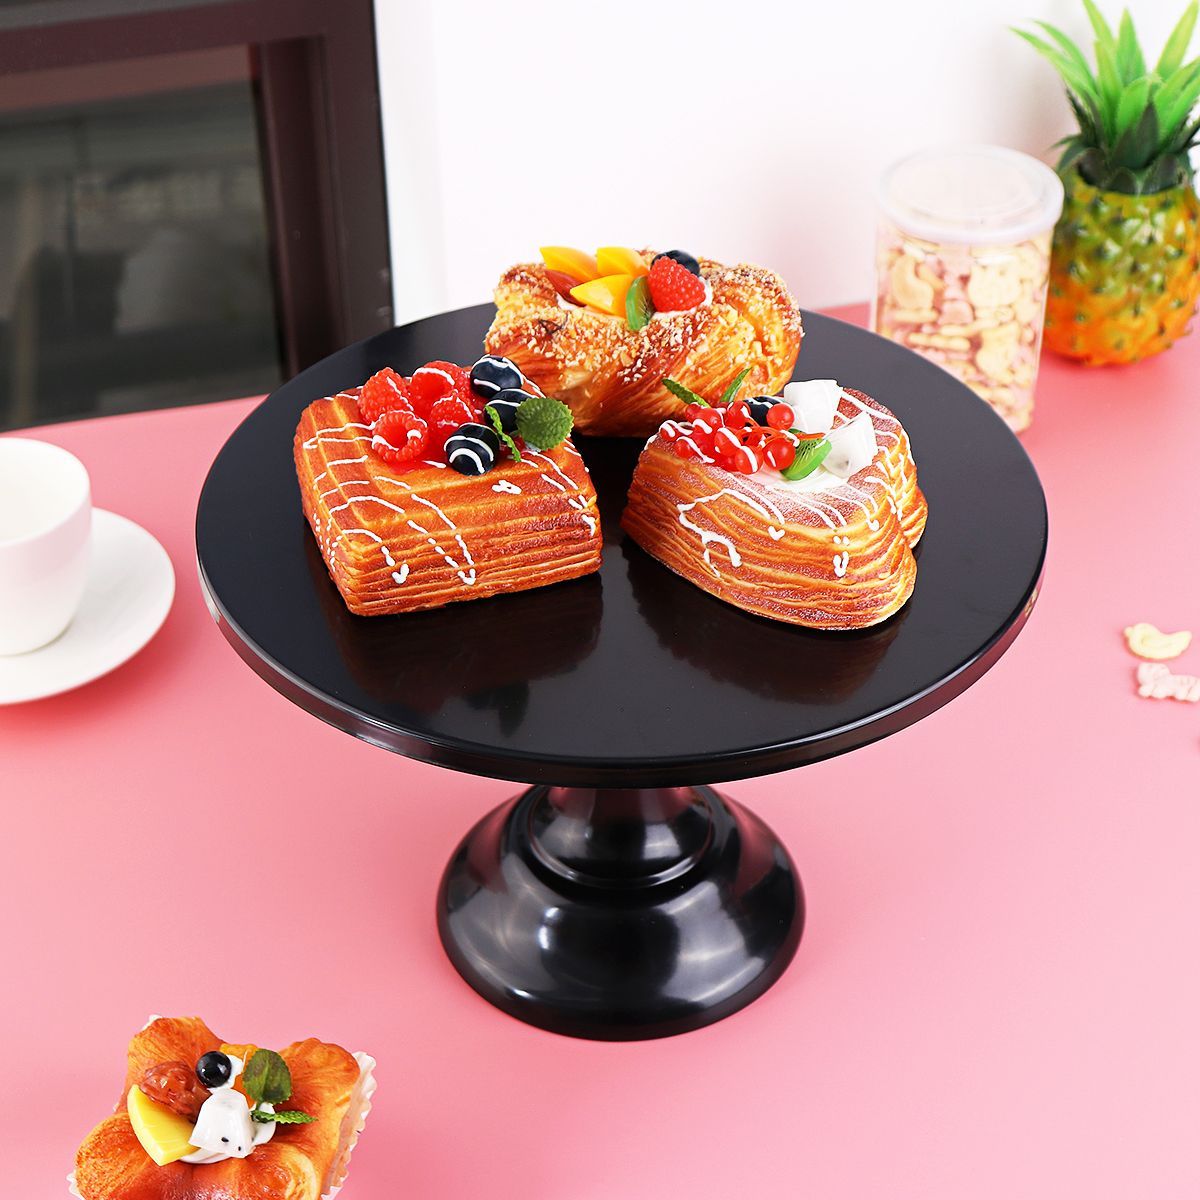 12-Inch-Iron-Round-Cake-Stand-Pedestal-Dessert-Candy-Holder-Wedding-Party-Decorations-1464520